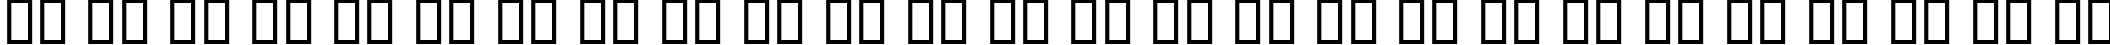 Пример написания английского алфавита шрифтом B Kamran Outline